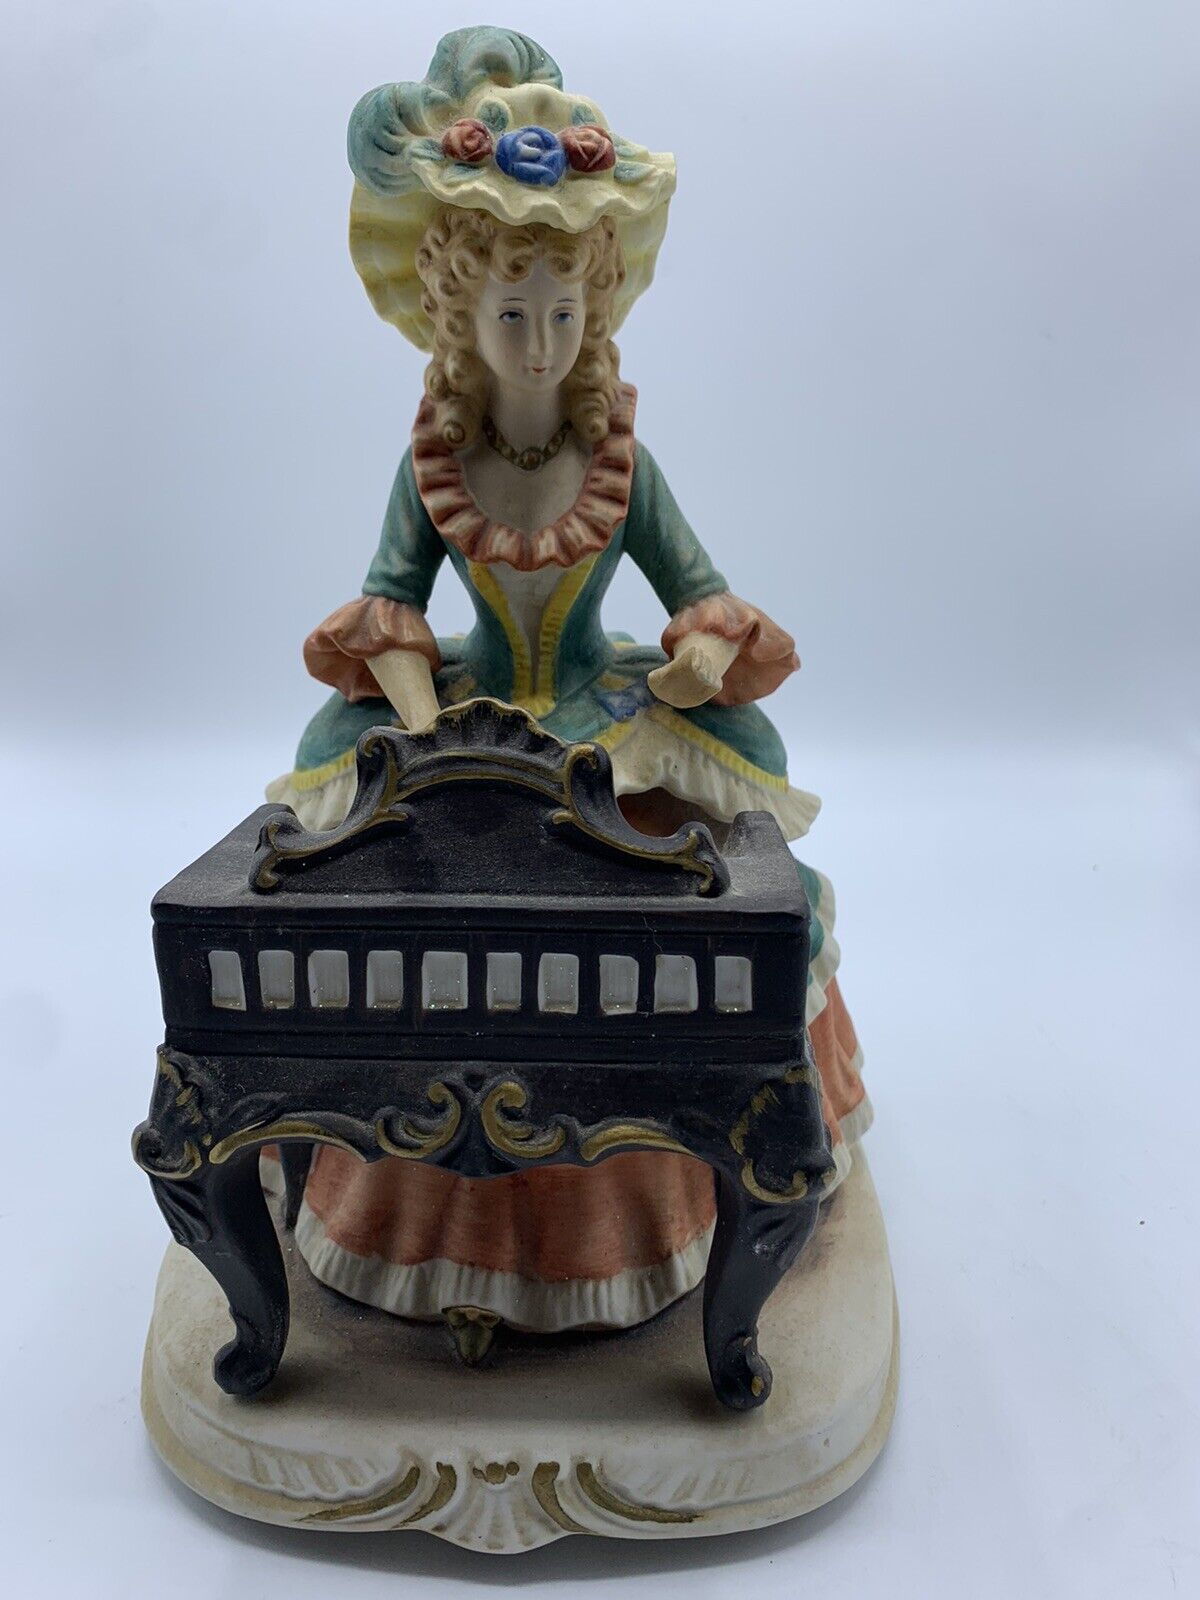 1987 Madame Harpsichord Melody in Motion Figurine~